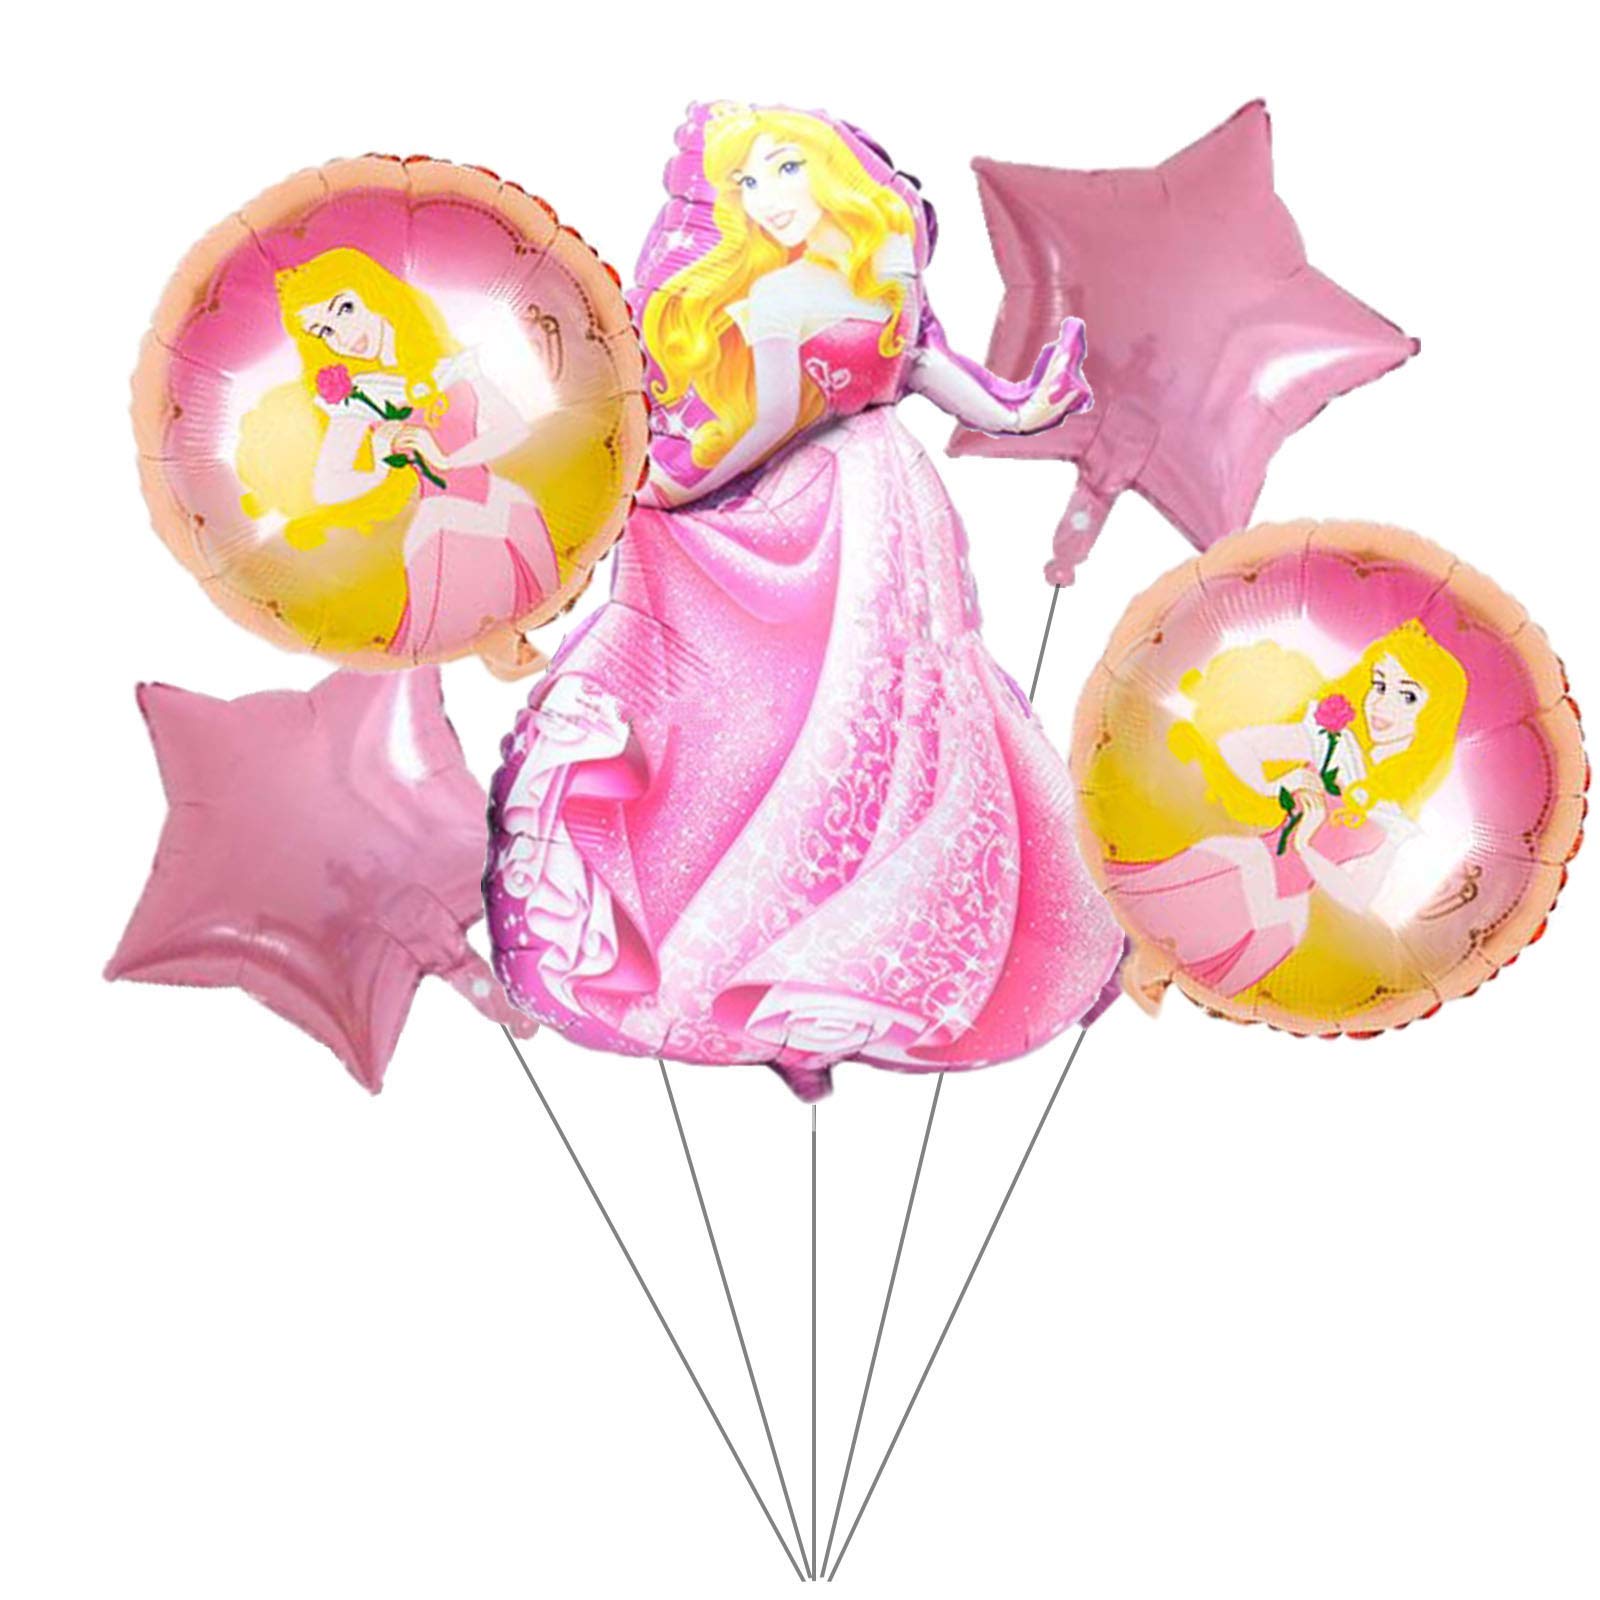 Disney Princess Aurora Cartoon Foil Balloon Set - 5 Pieces For Birthday Party